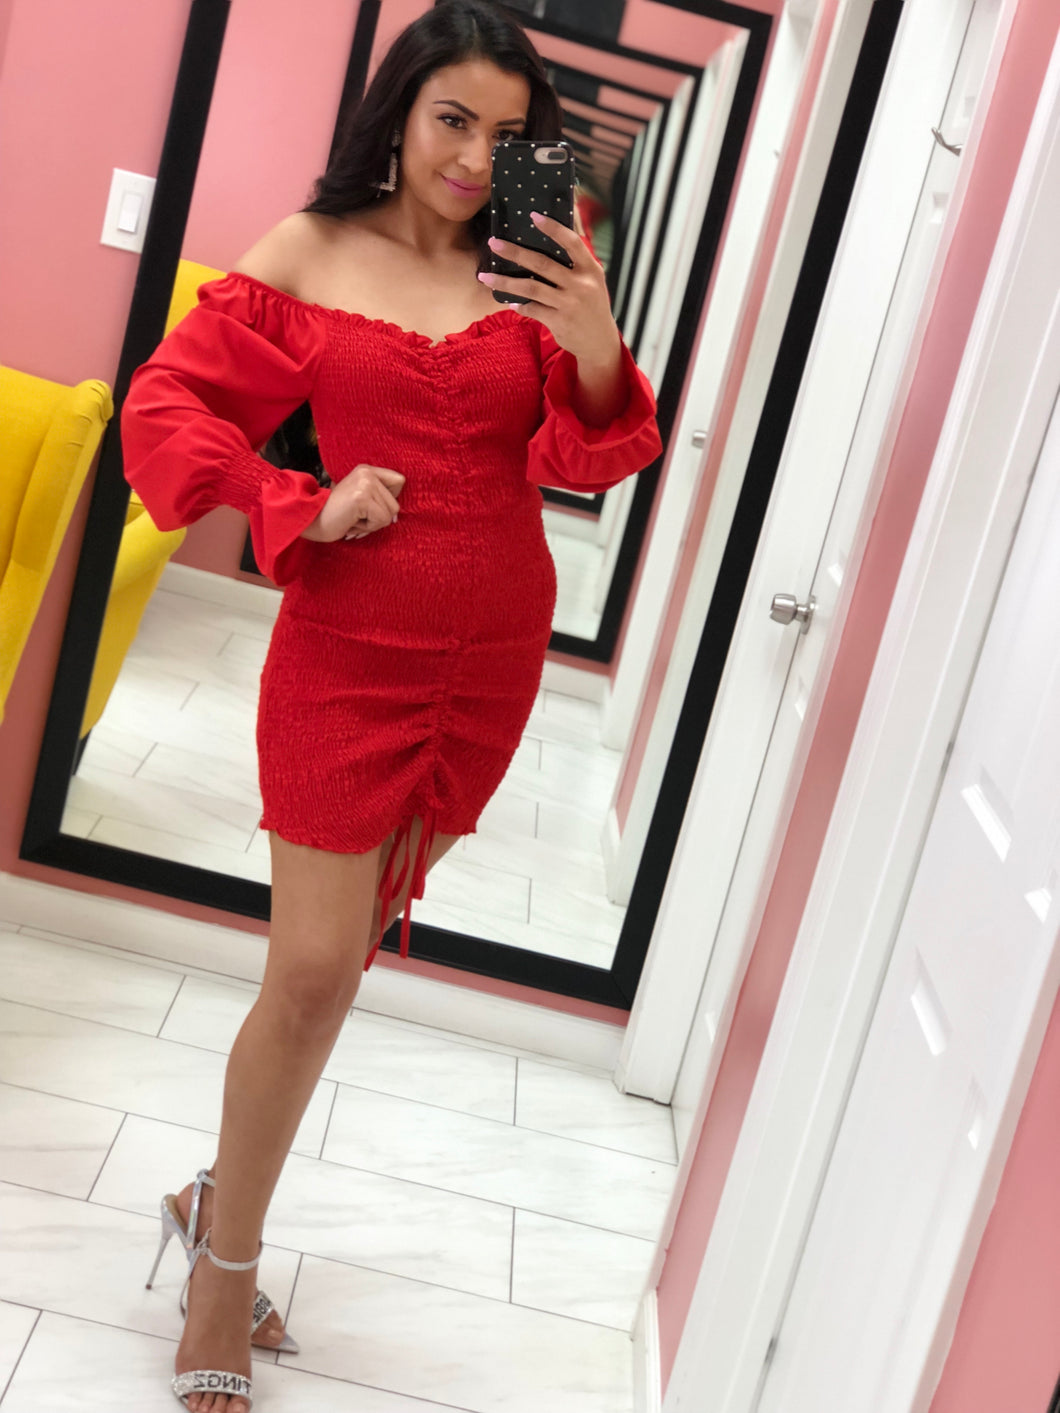 Red dress love